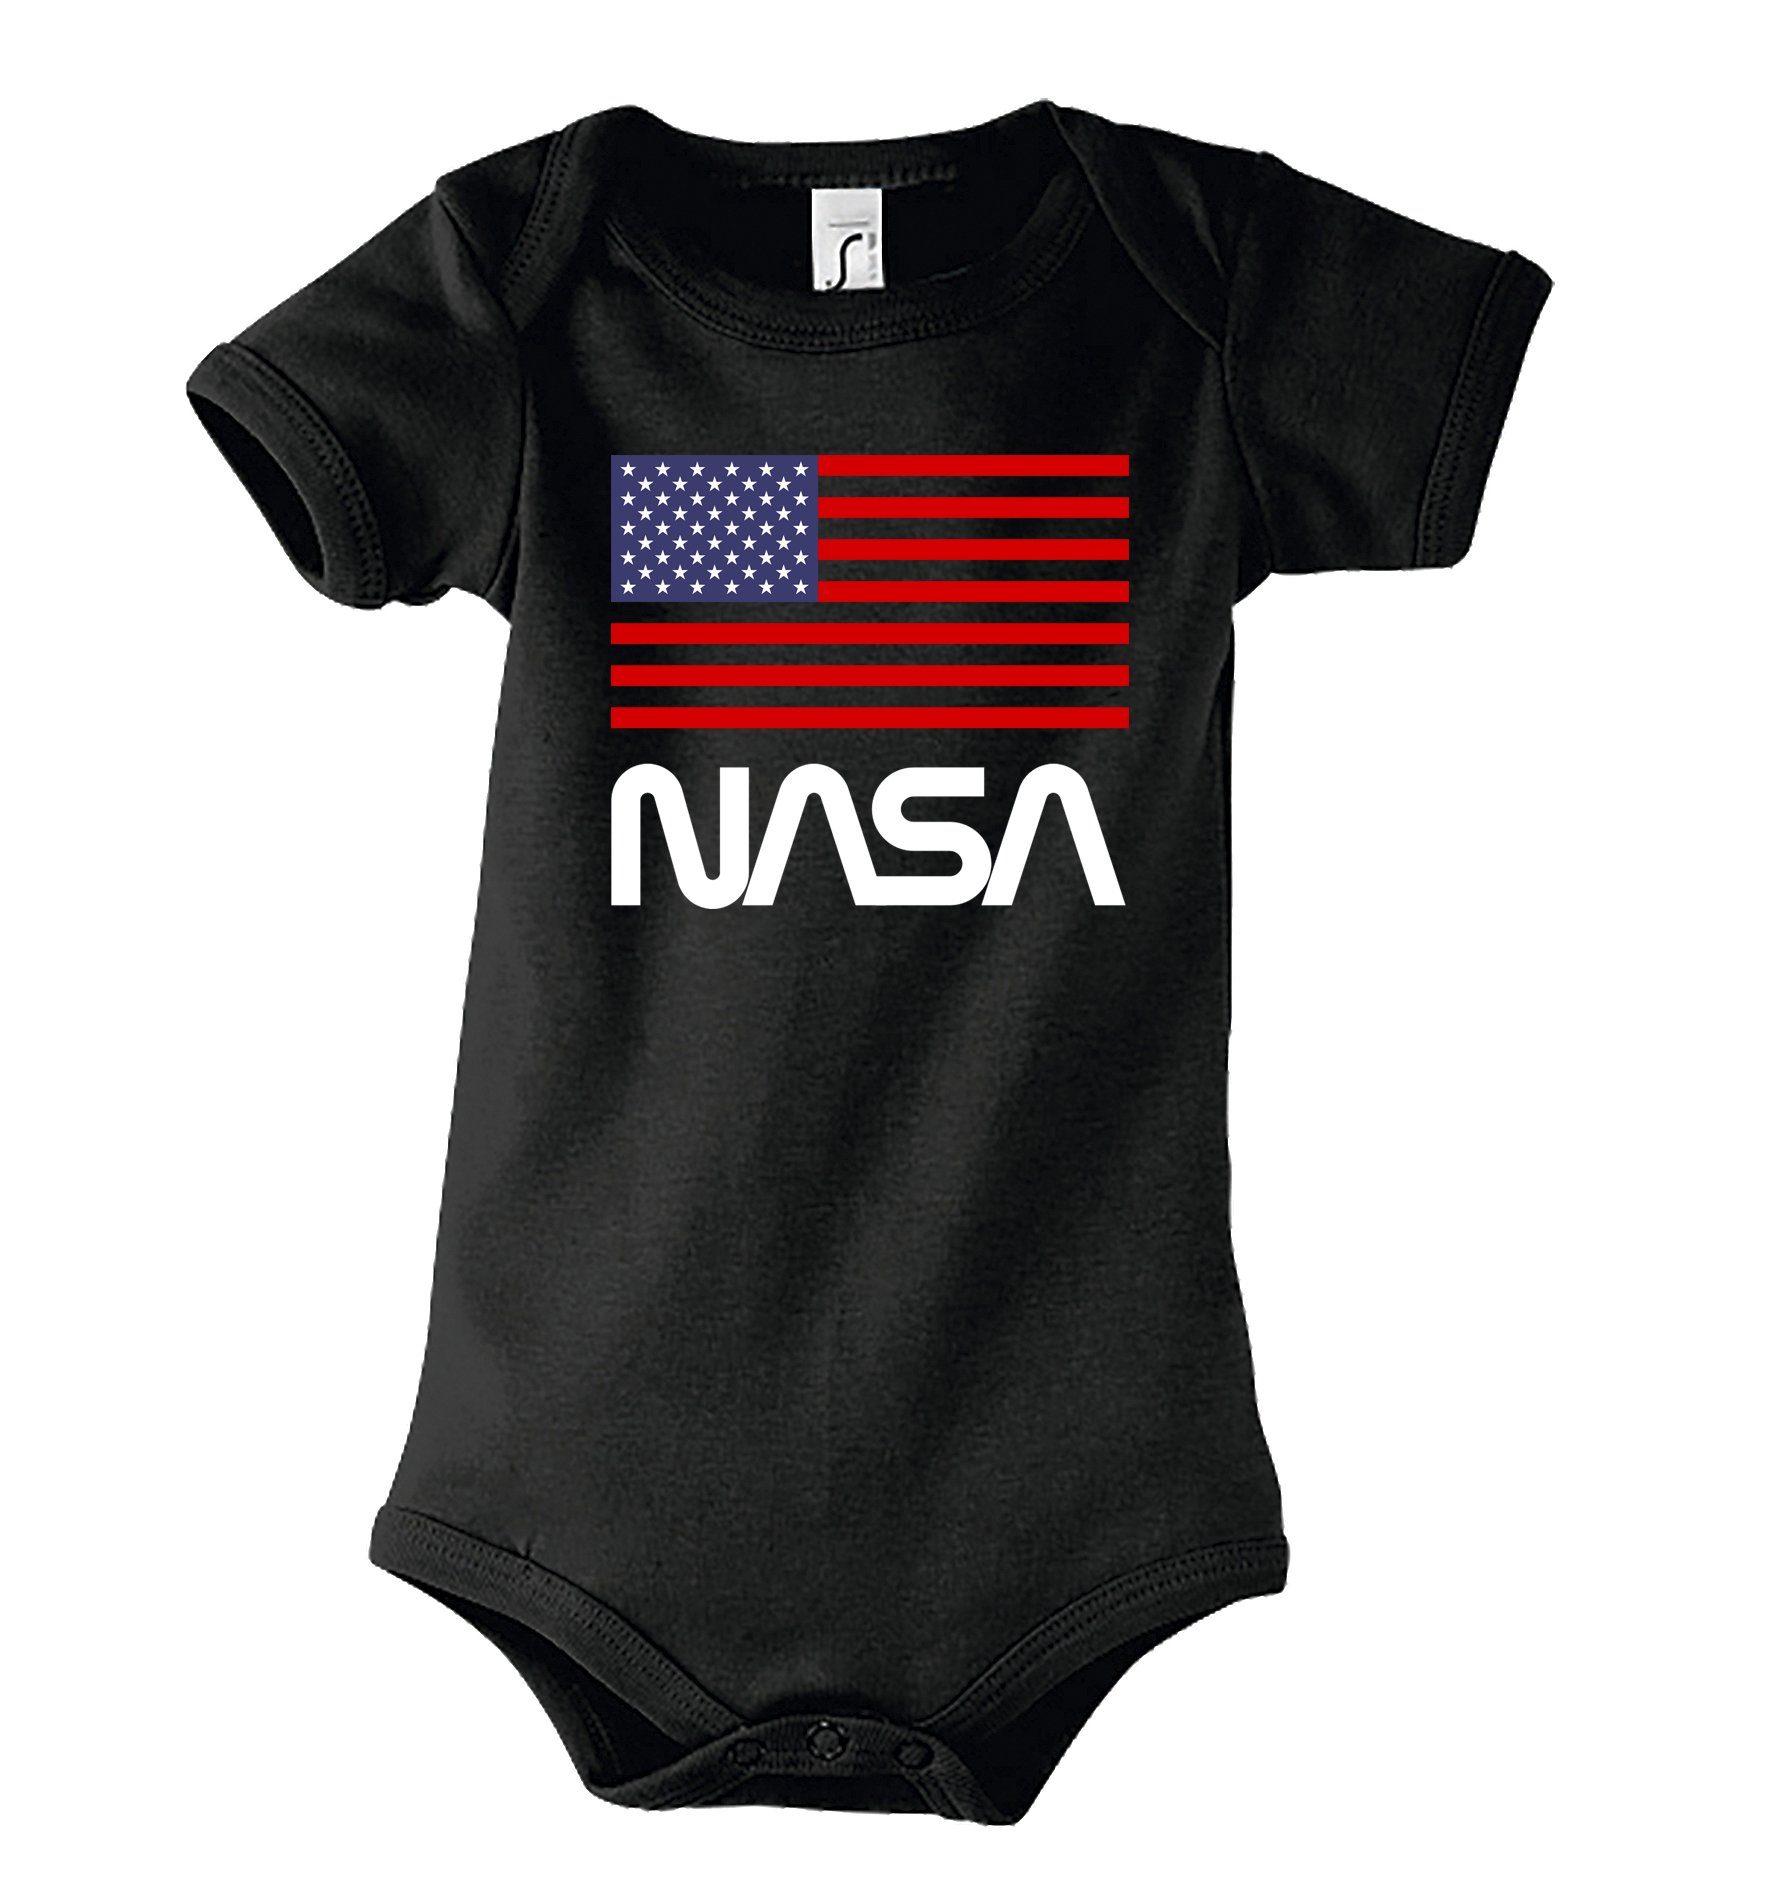 Youth Designz Kurzarmbody Baby Body Strampler NASA USA mit niedlichem Frontprint Schwarz